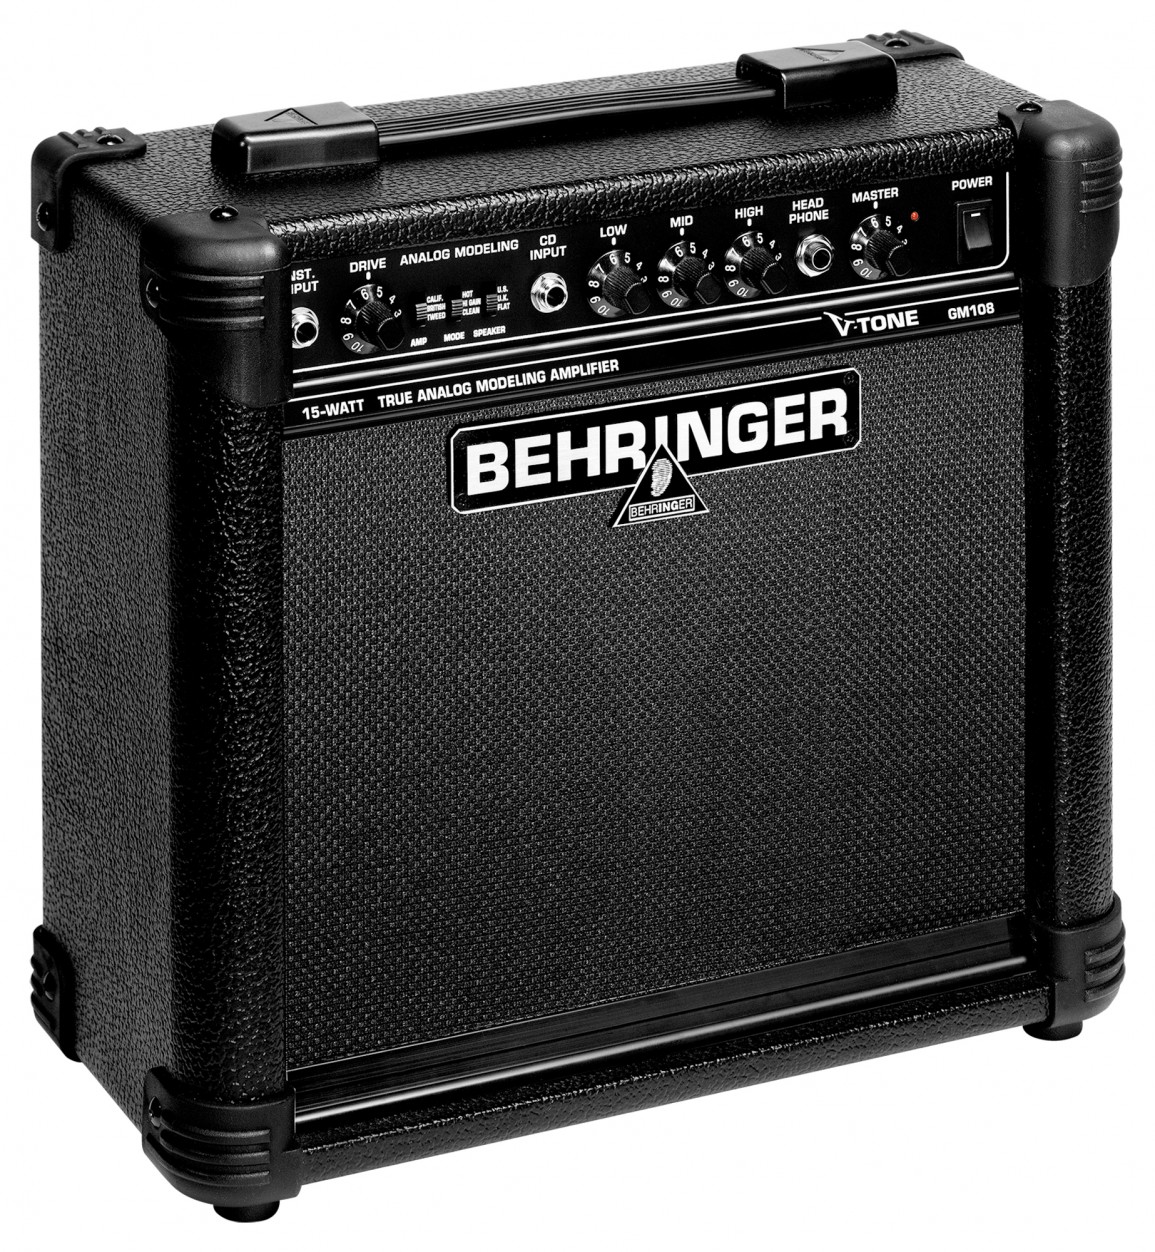 V toned. Комбик Behringer gm108. Комбоусилитель Behringer gm108 v-Tone. Беренджер комбик гитарный. Комбоусилитель Behringer 15w.